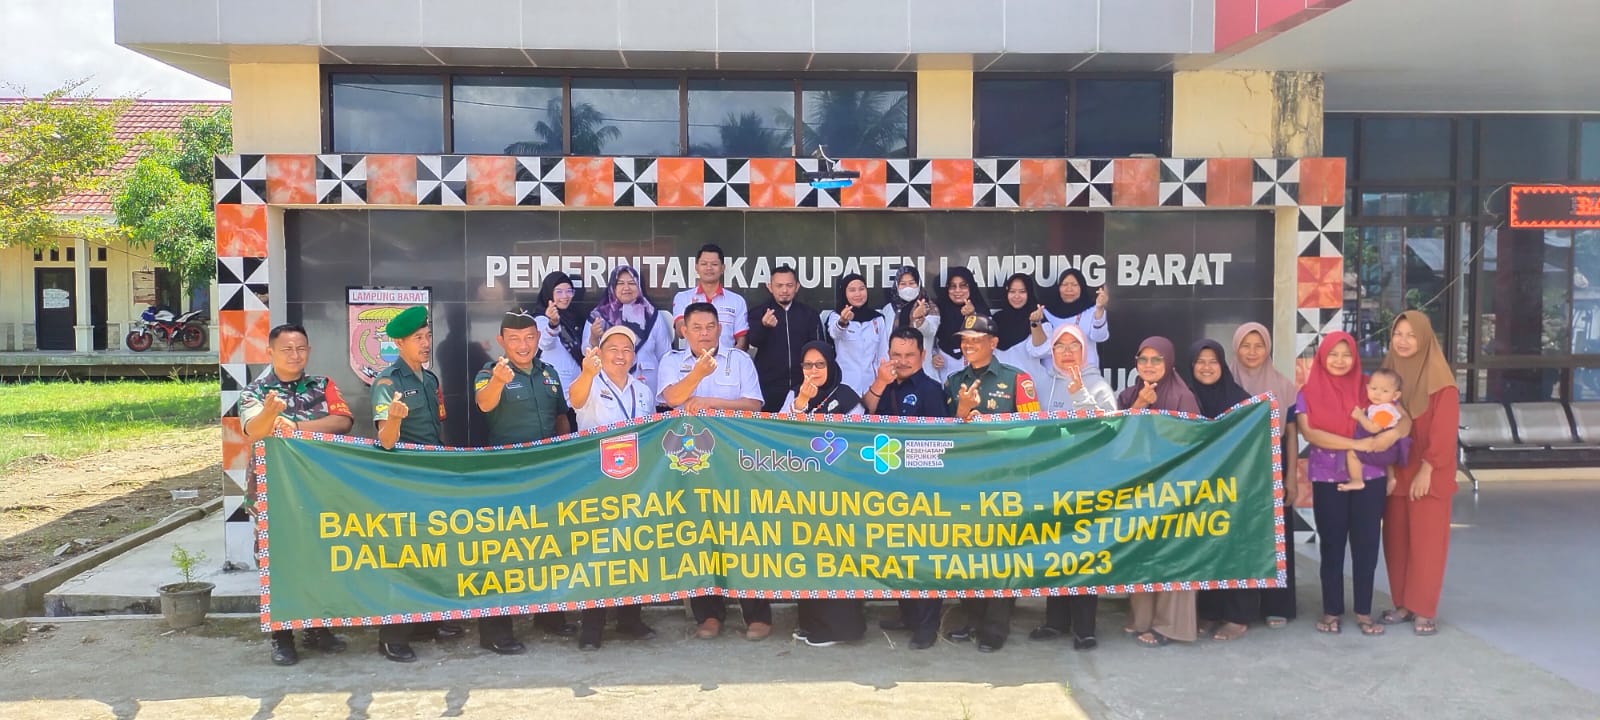 Kegiatan Baksos TMKK, DP2KBP3A Lampung Barat Targetkan Pelayanan 1.176 Akseptor 